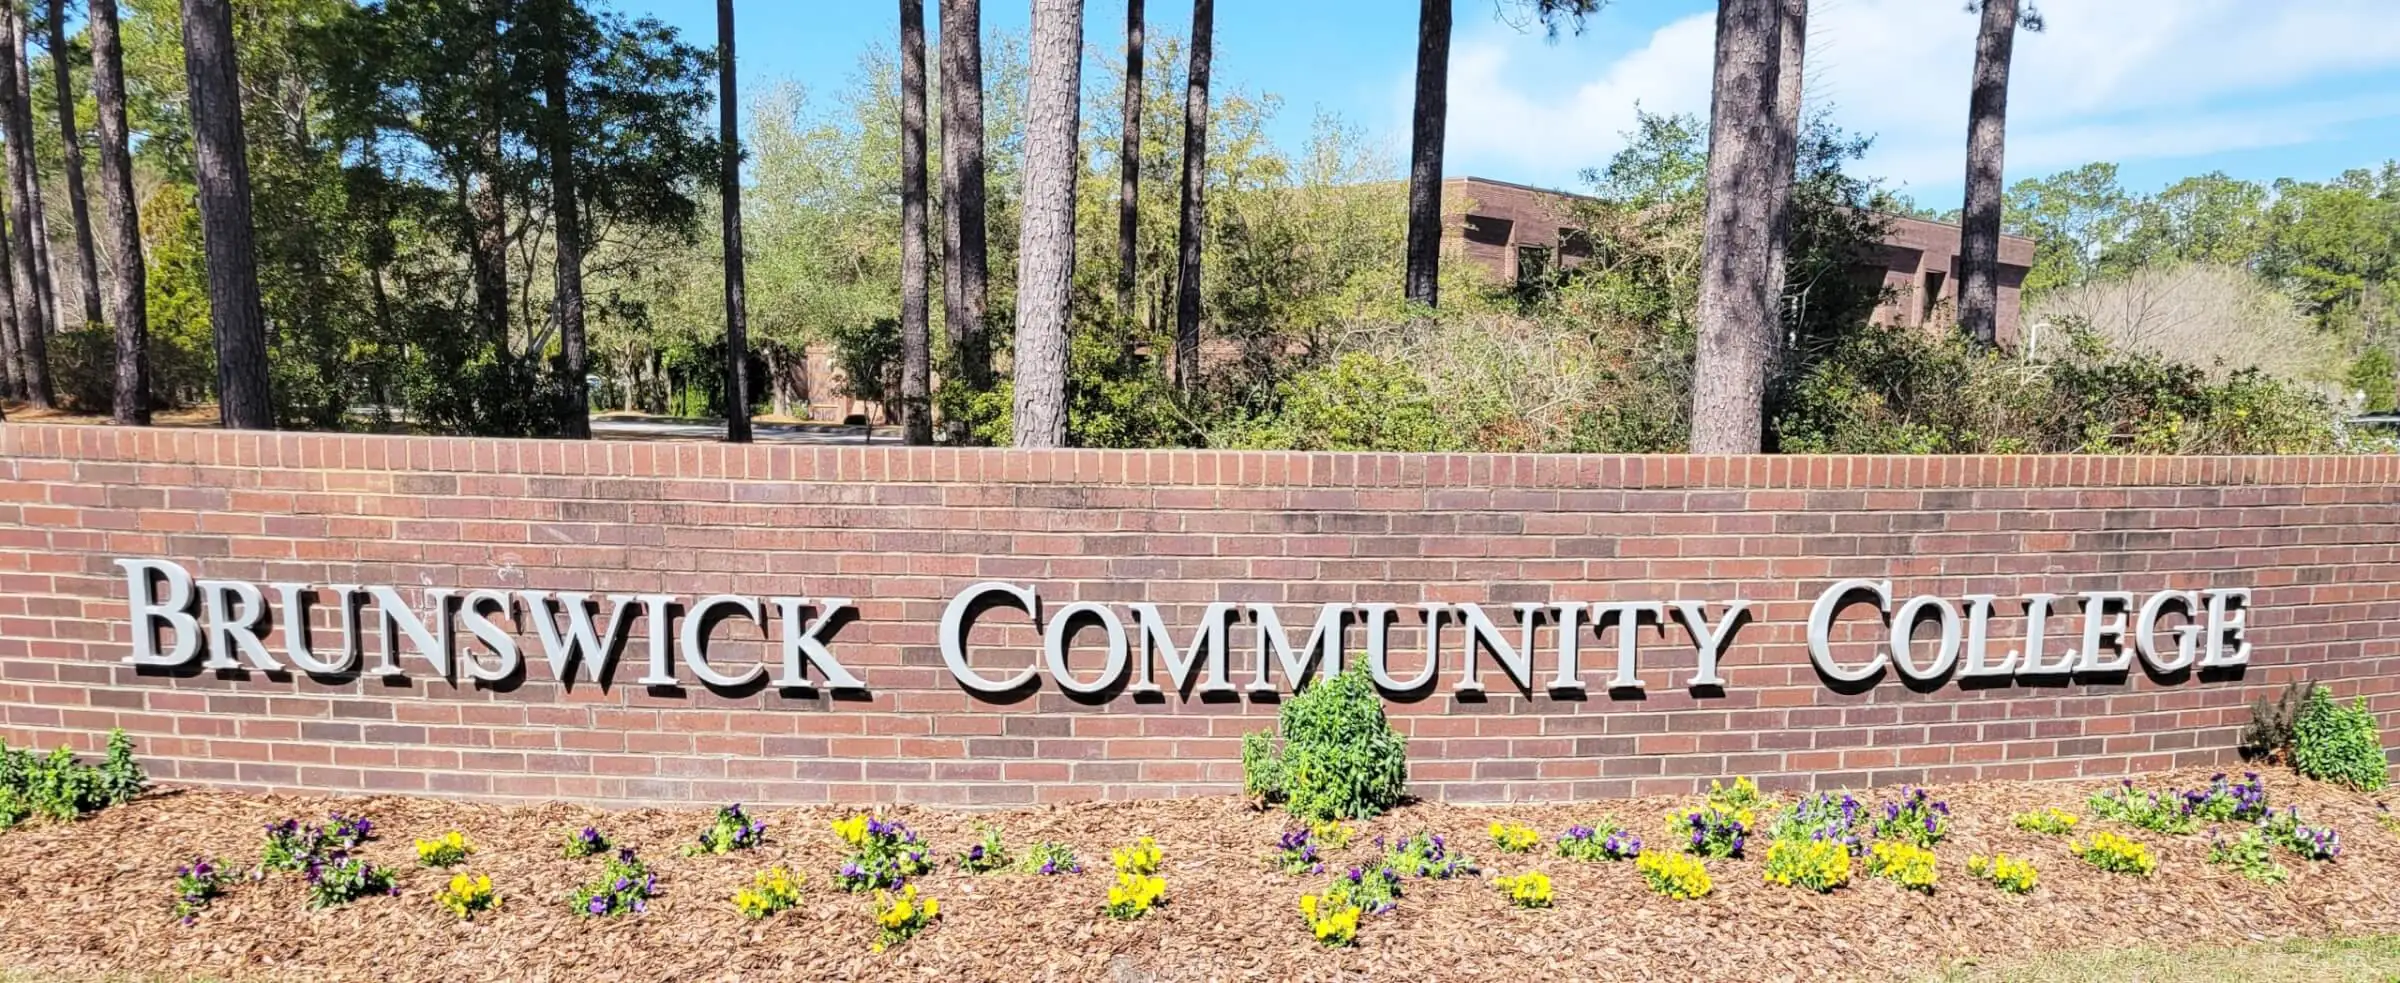 Brunswick Community College sign